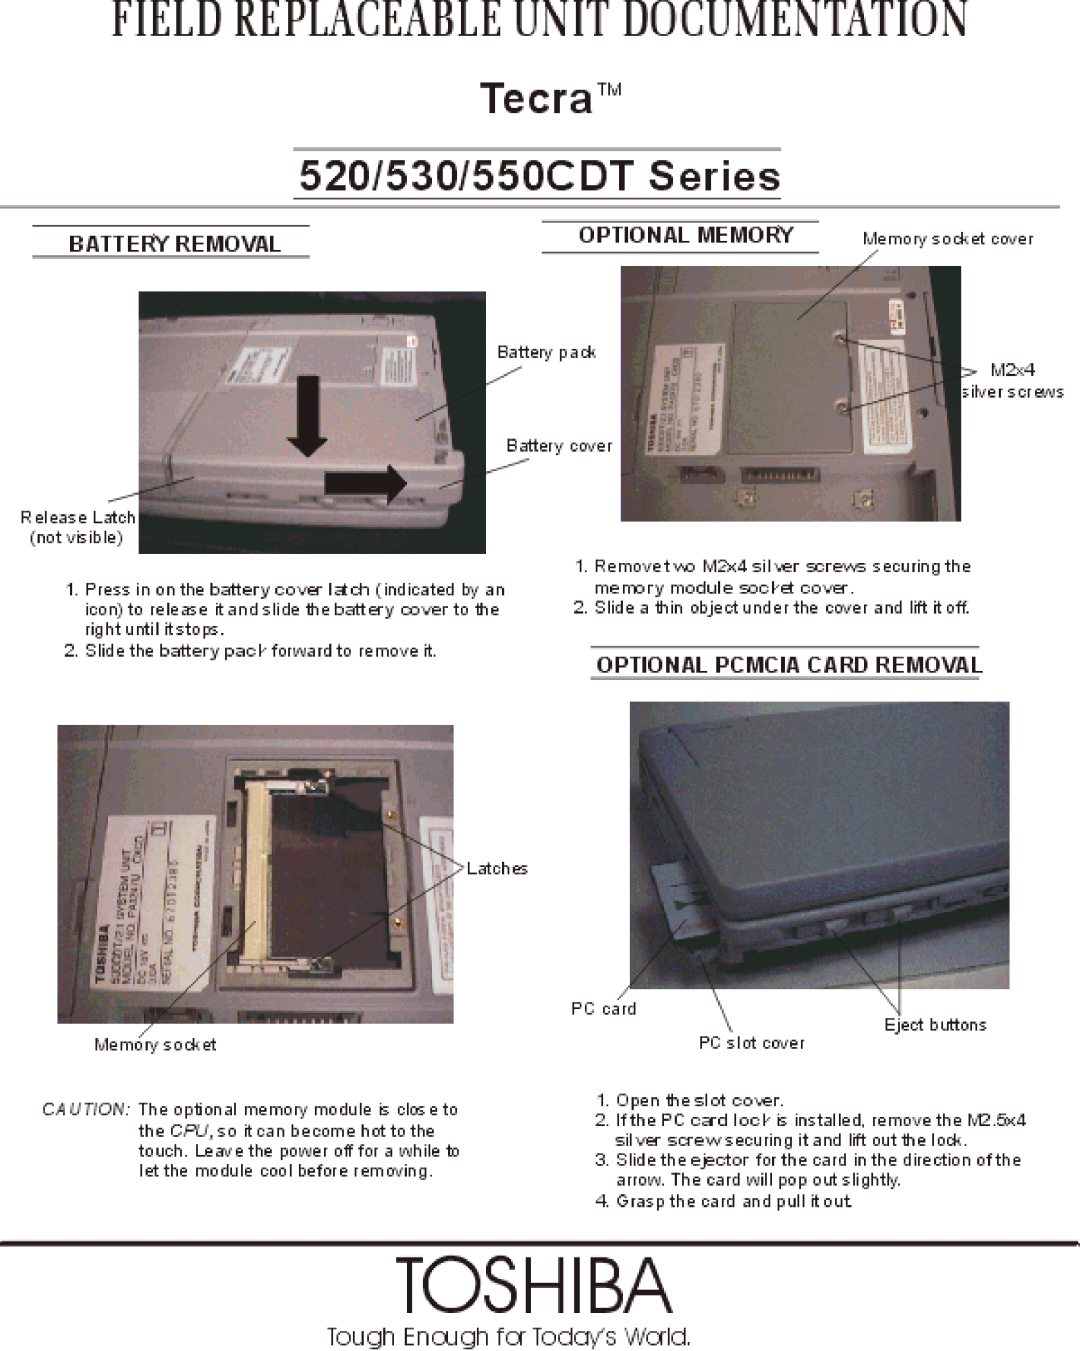 Toshiba 550CDT, 530 manual 